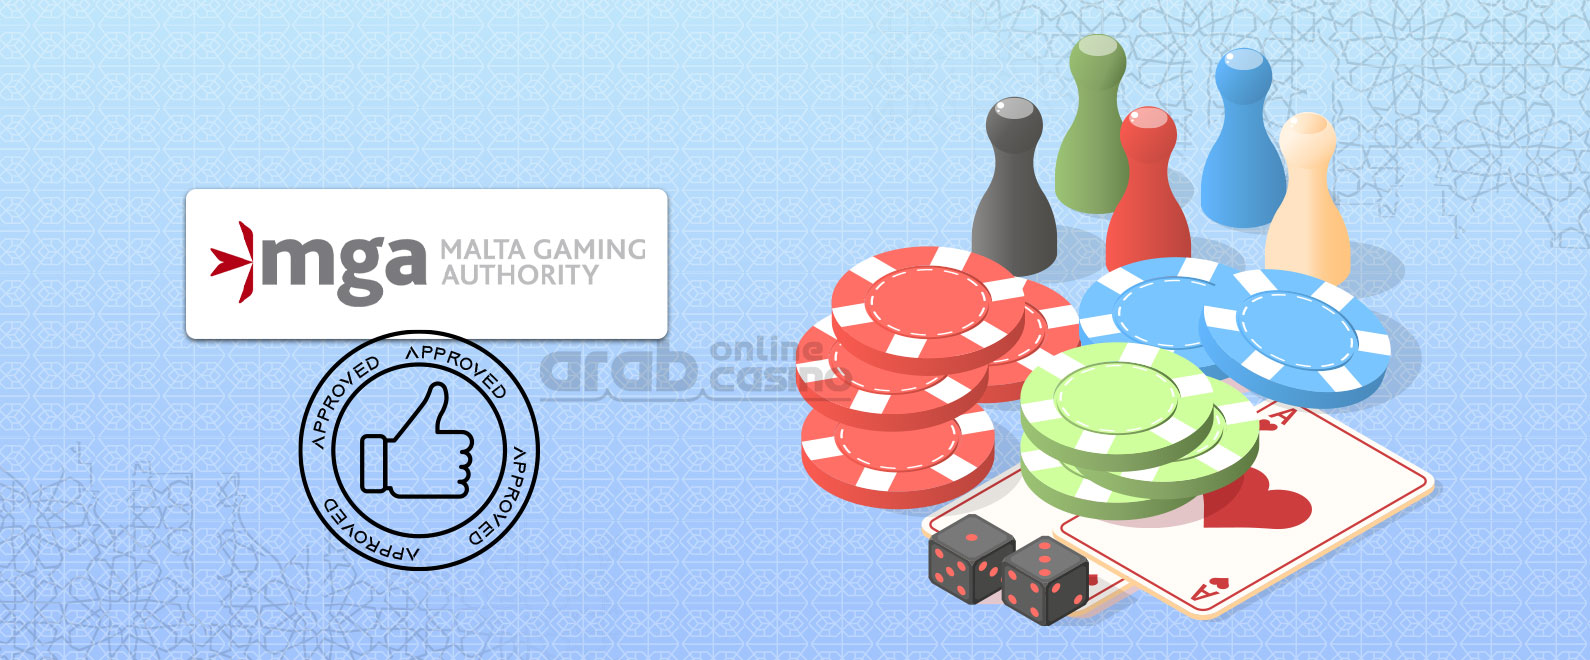 qatar casino sites have mga license